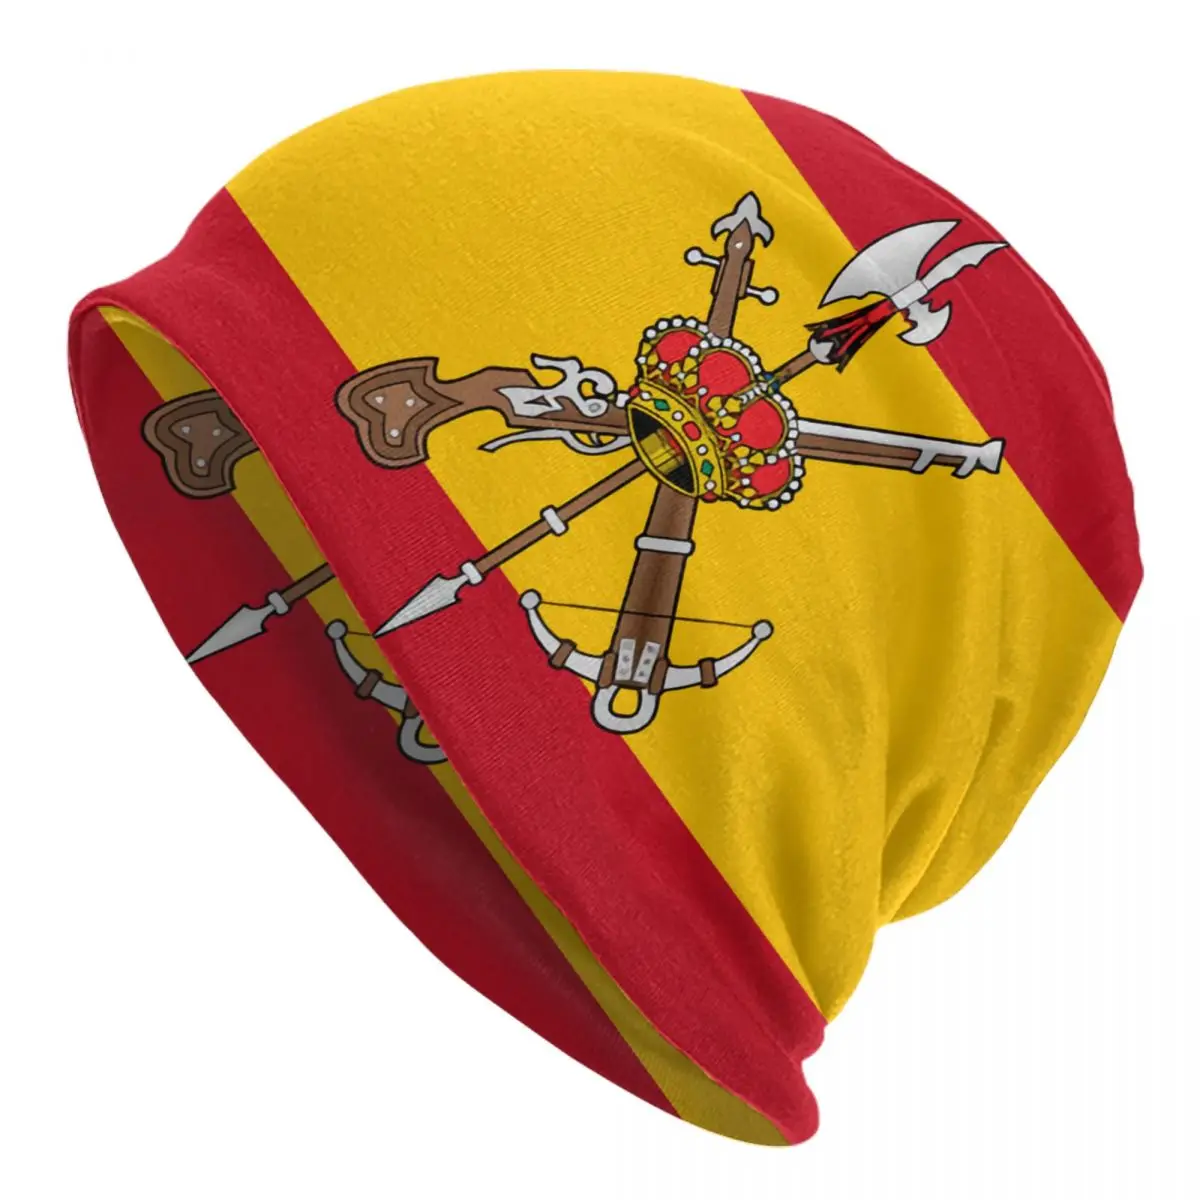 

Шапки-бини с флагом испанского легиона, шапки унисекс, зимняя теплая вязаная шапка в стиле хип-хоп, взрослая испанская армейская шапка гордо...